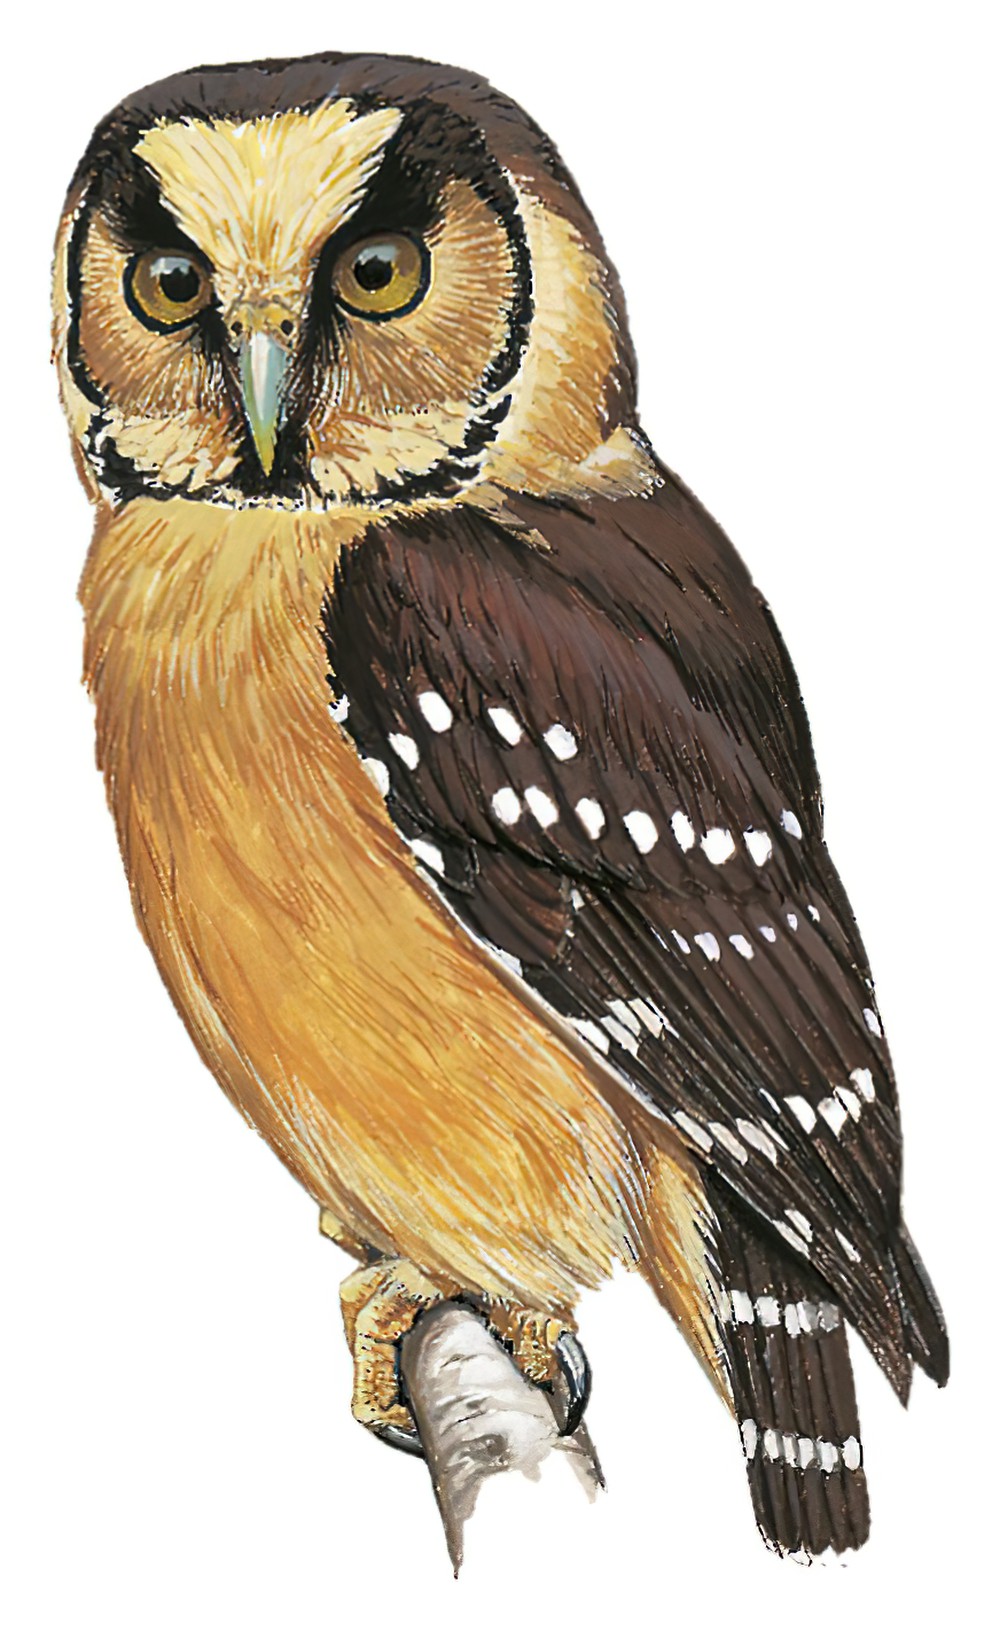 Buff-fronted Owl / Aegolius harrisii